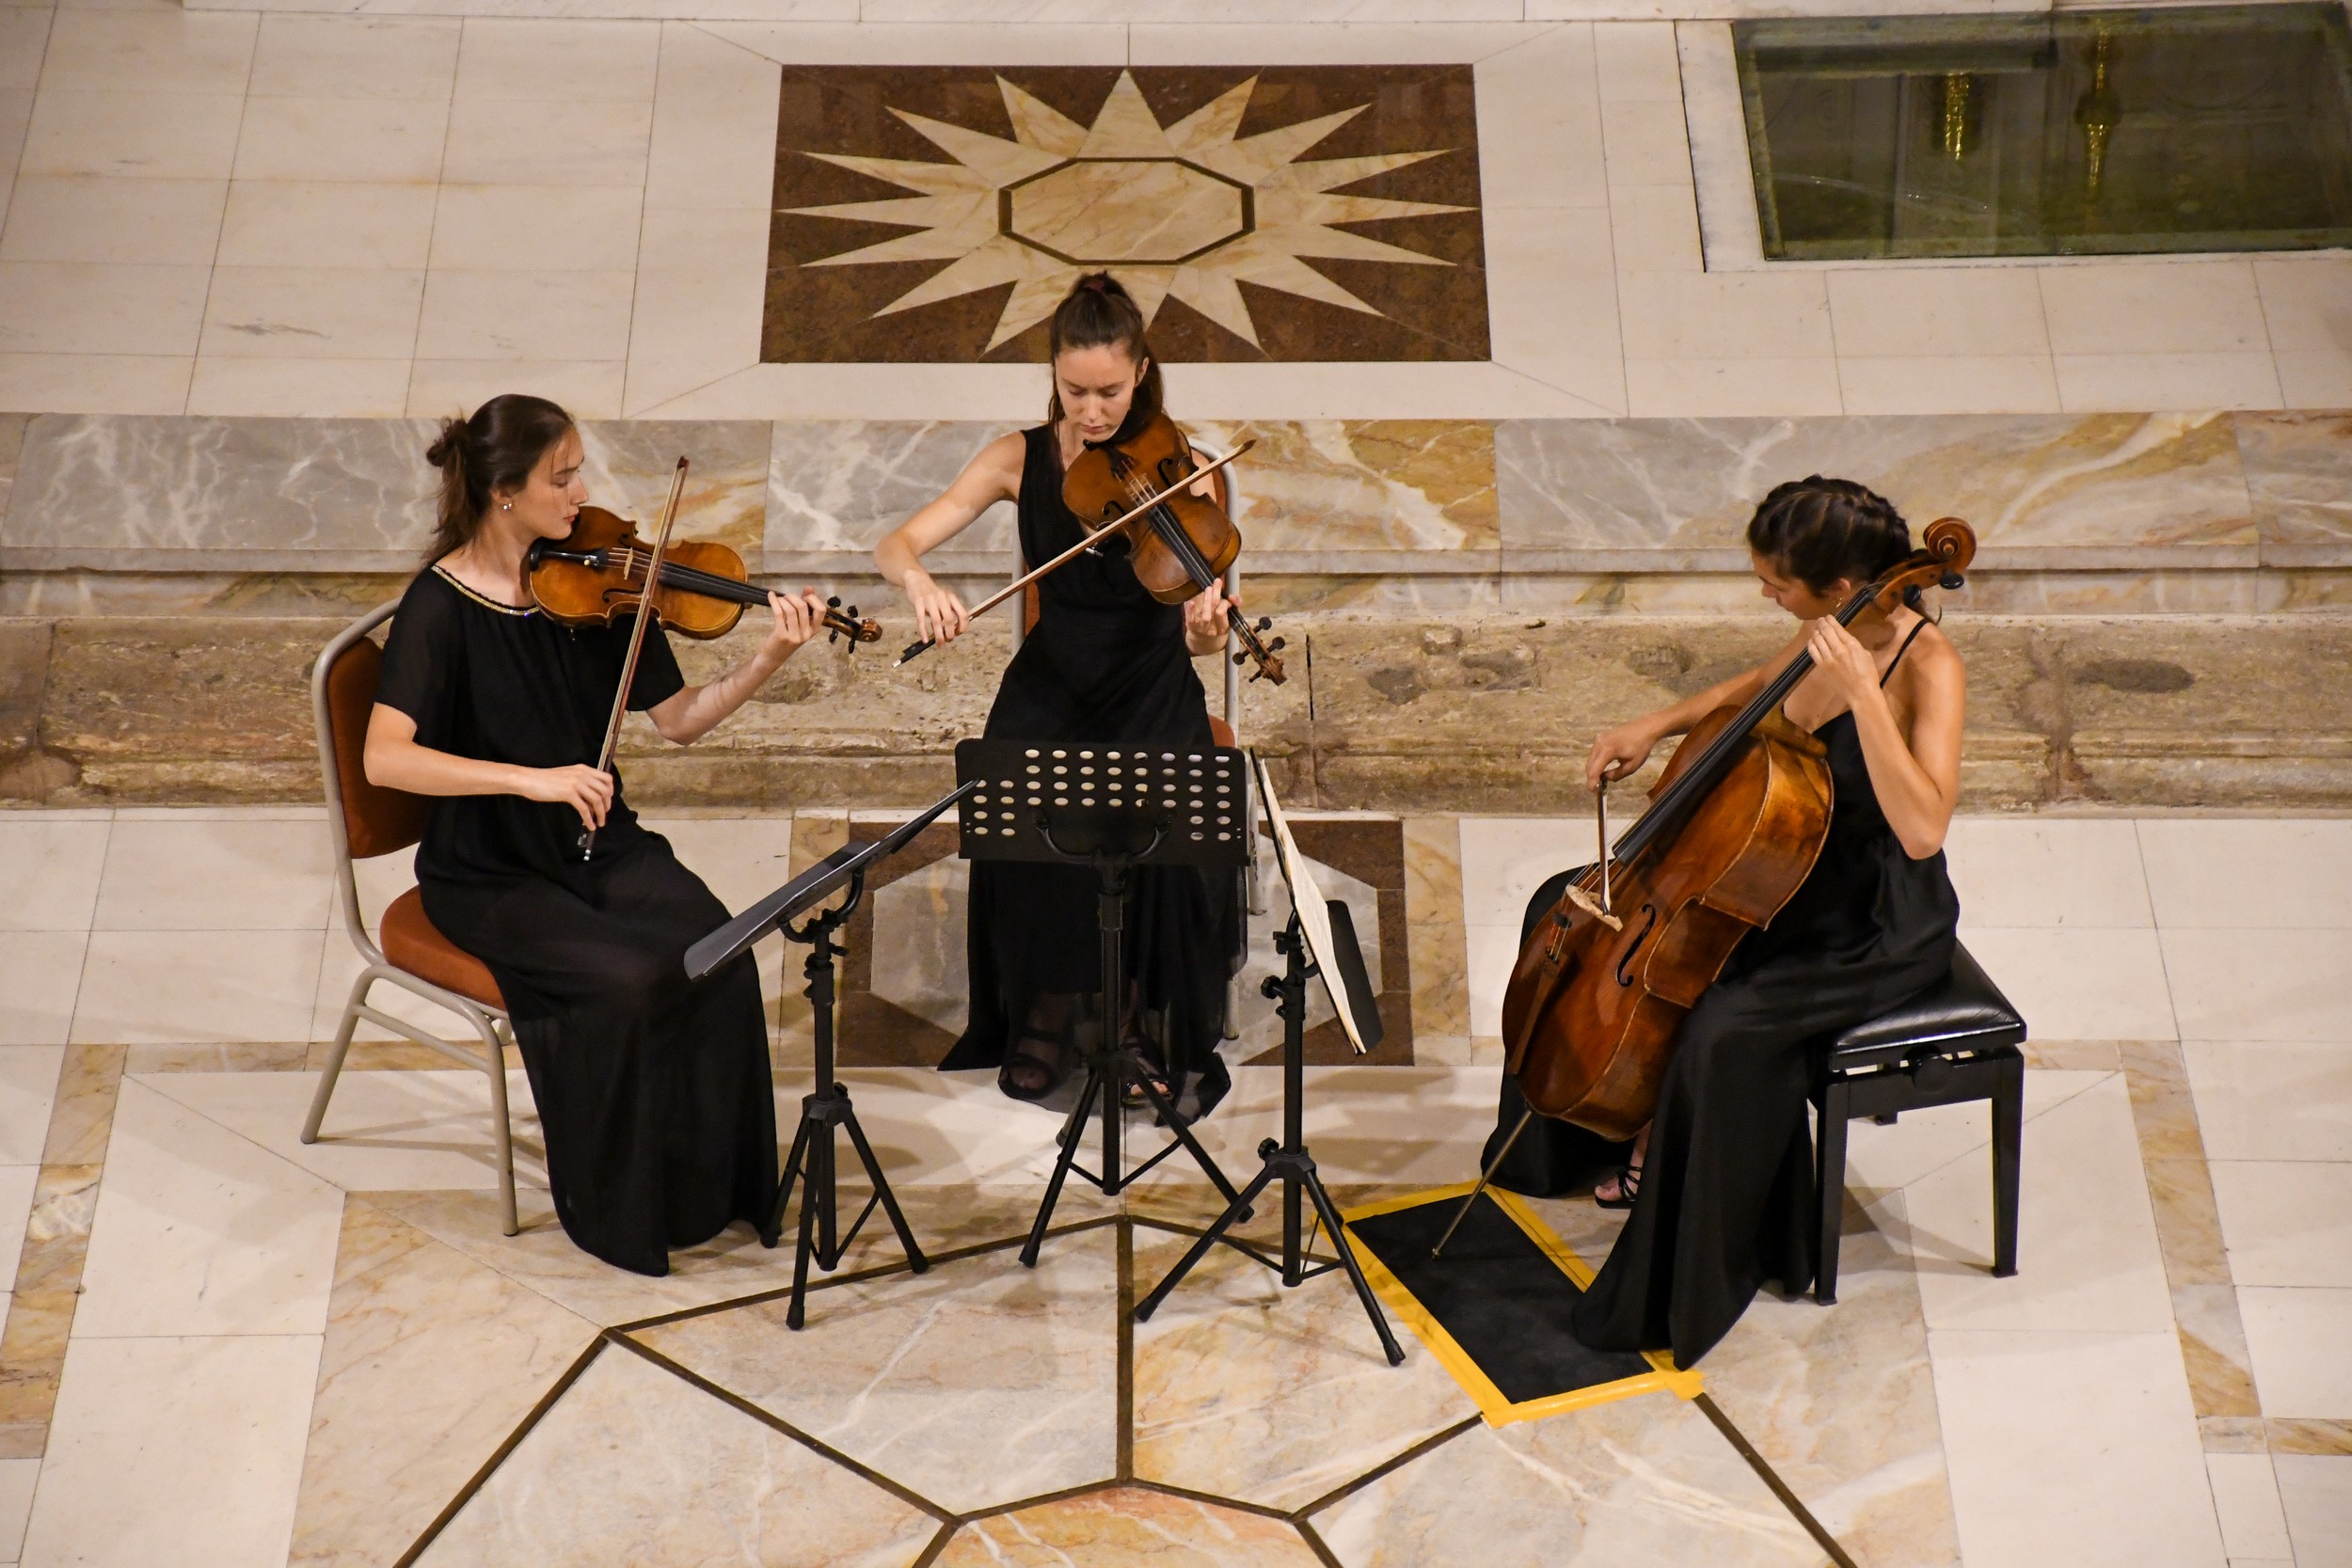 Youth enthusiasm and virtuosity with the string trio “Sypniewski”